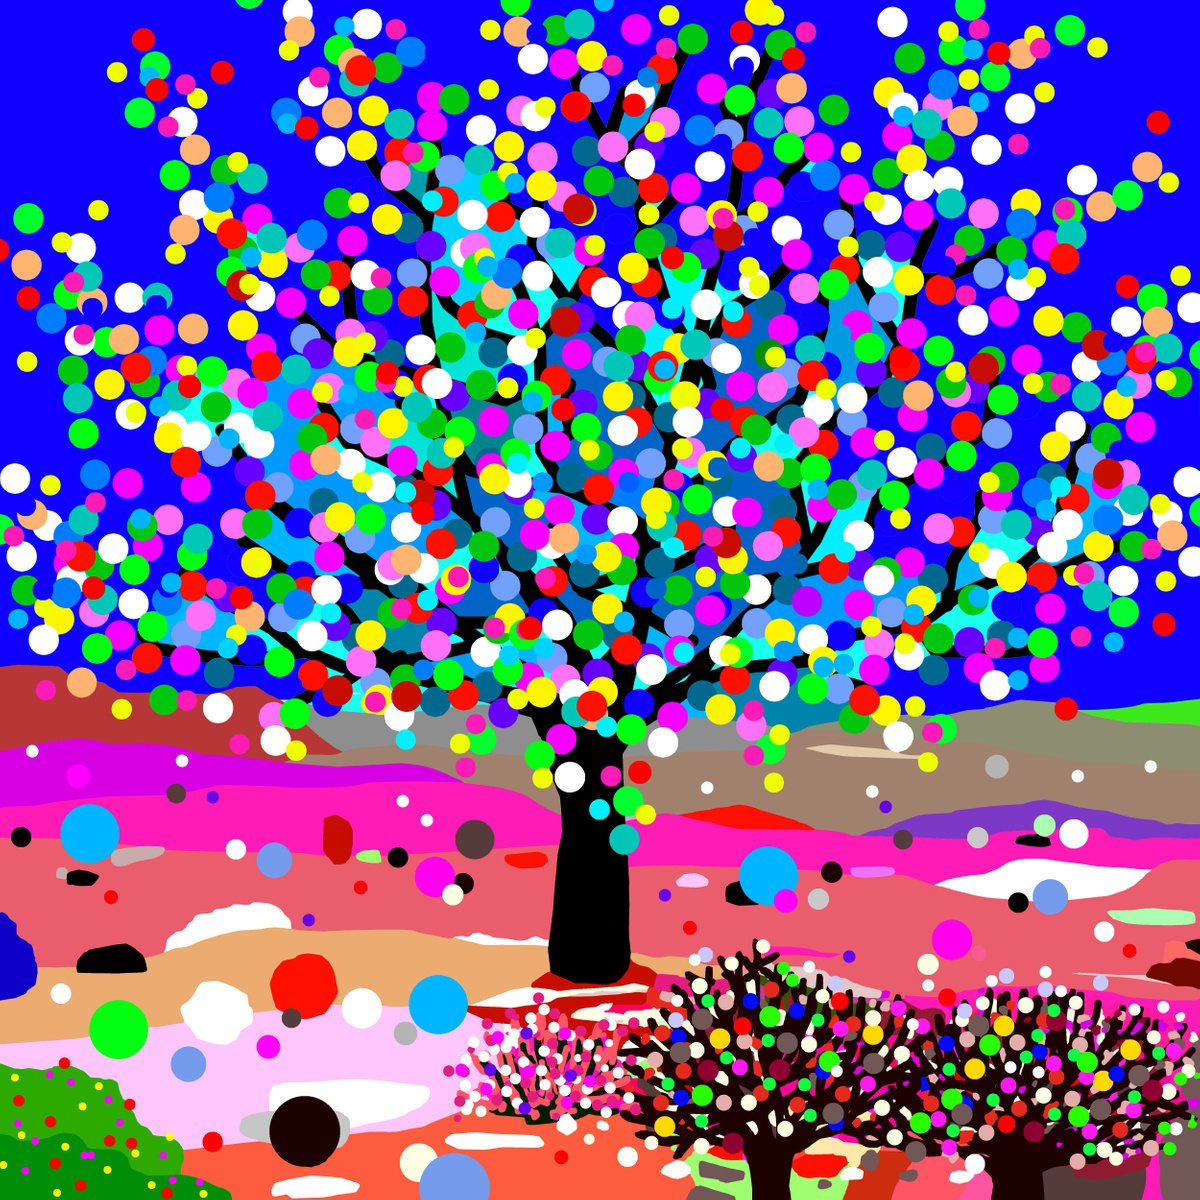 The lightning seeds (Las semillas de luz) (pop art, landscape) by Alejos